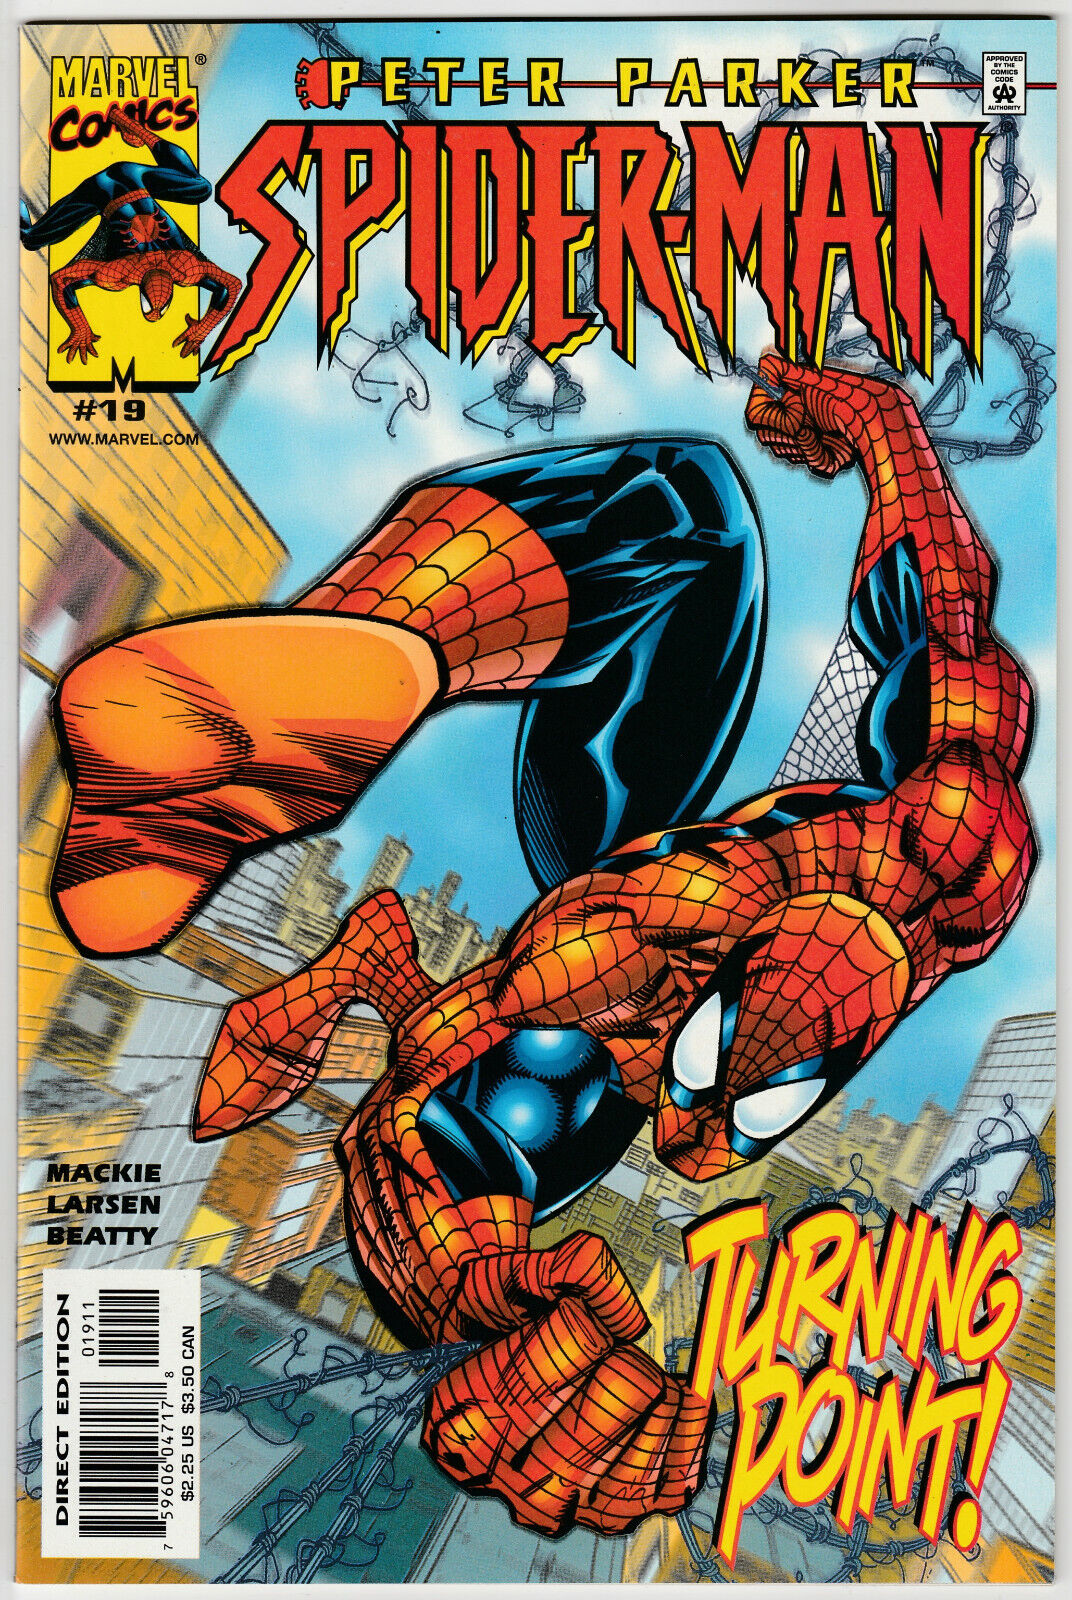 Marvel PETER PARKER SPIDER-MAN #19 (2000) Howard Mackie Erik Larsen John Romita